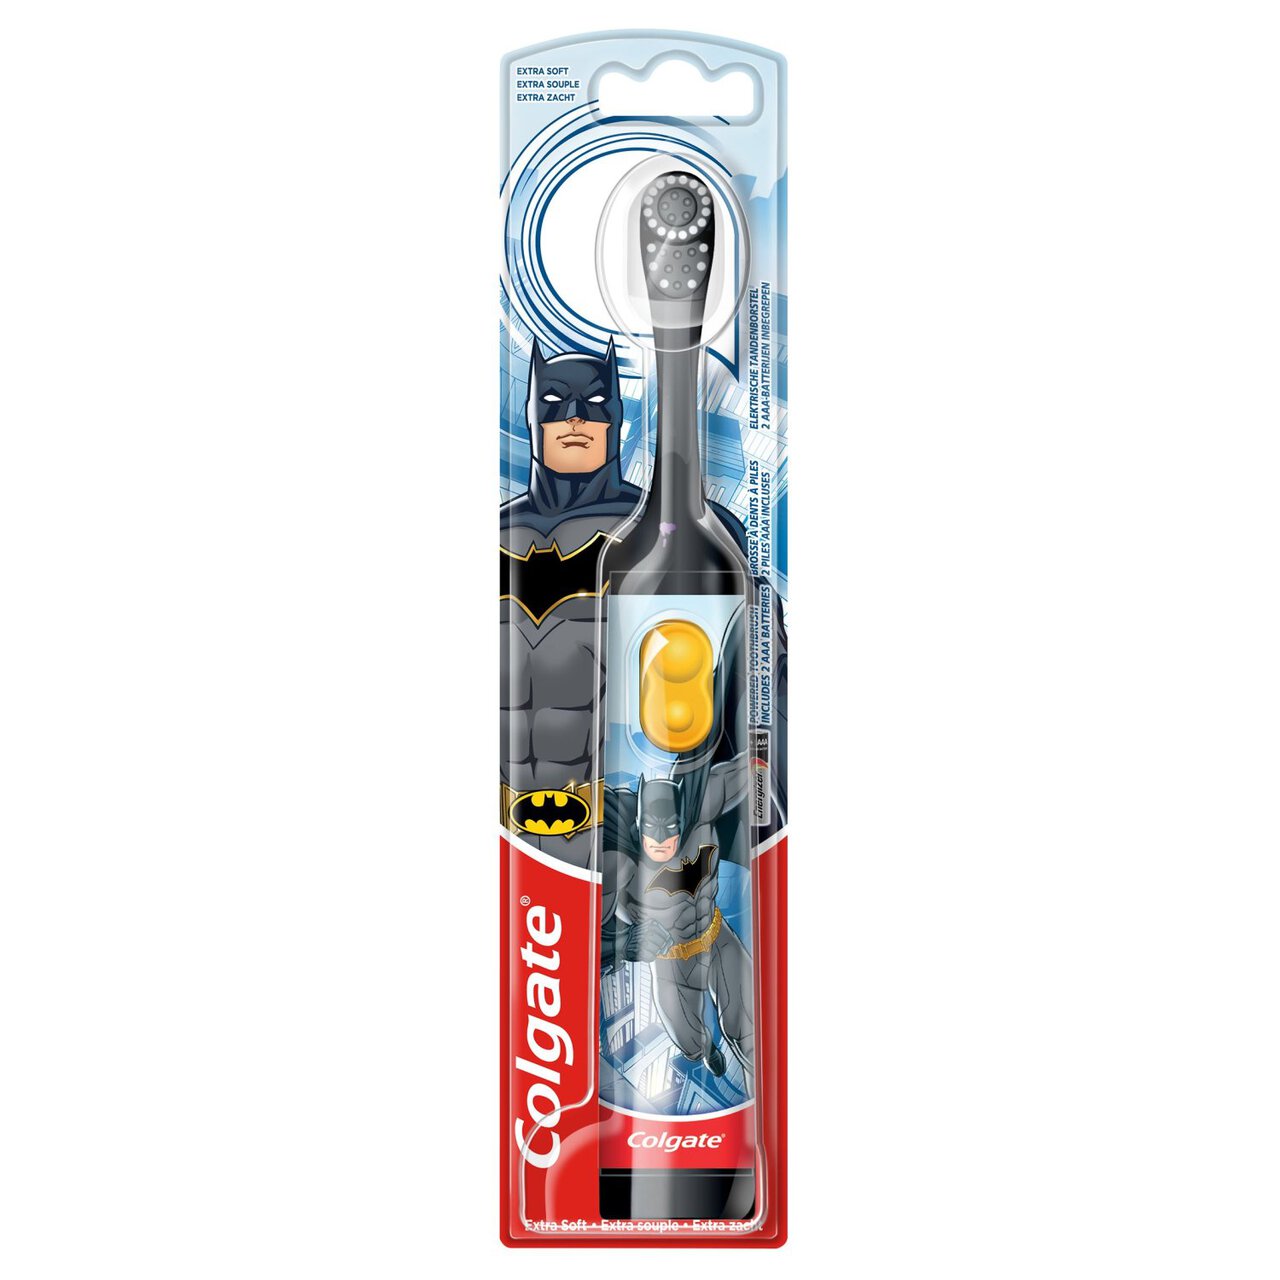 Colgate Batman Extra Soft Battery Kids Toothbrush